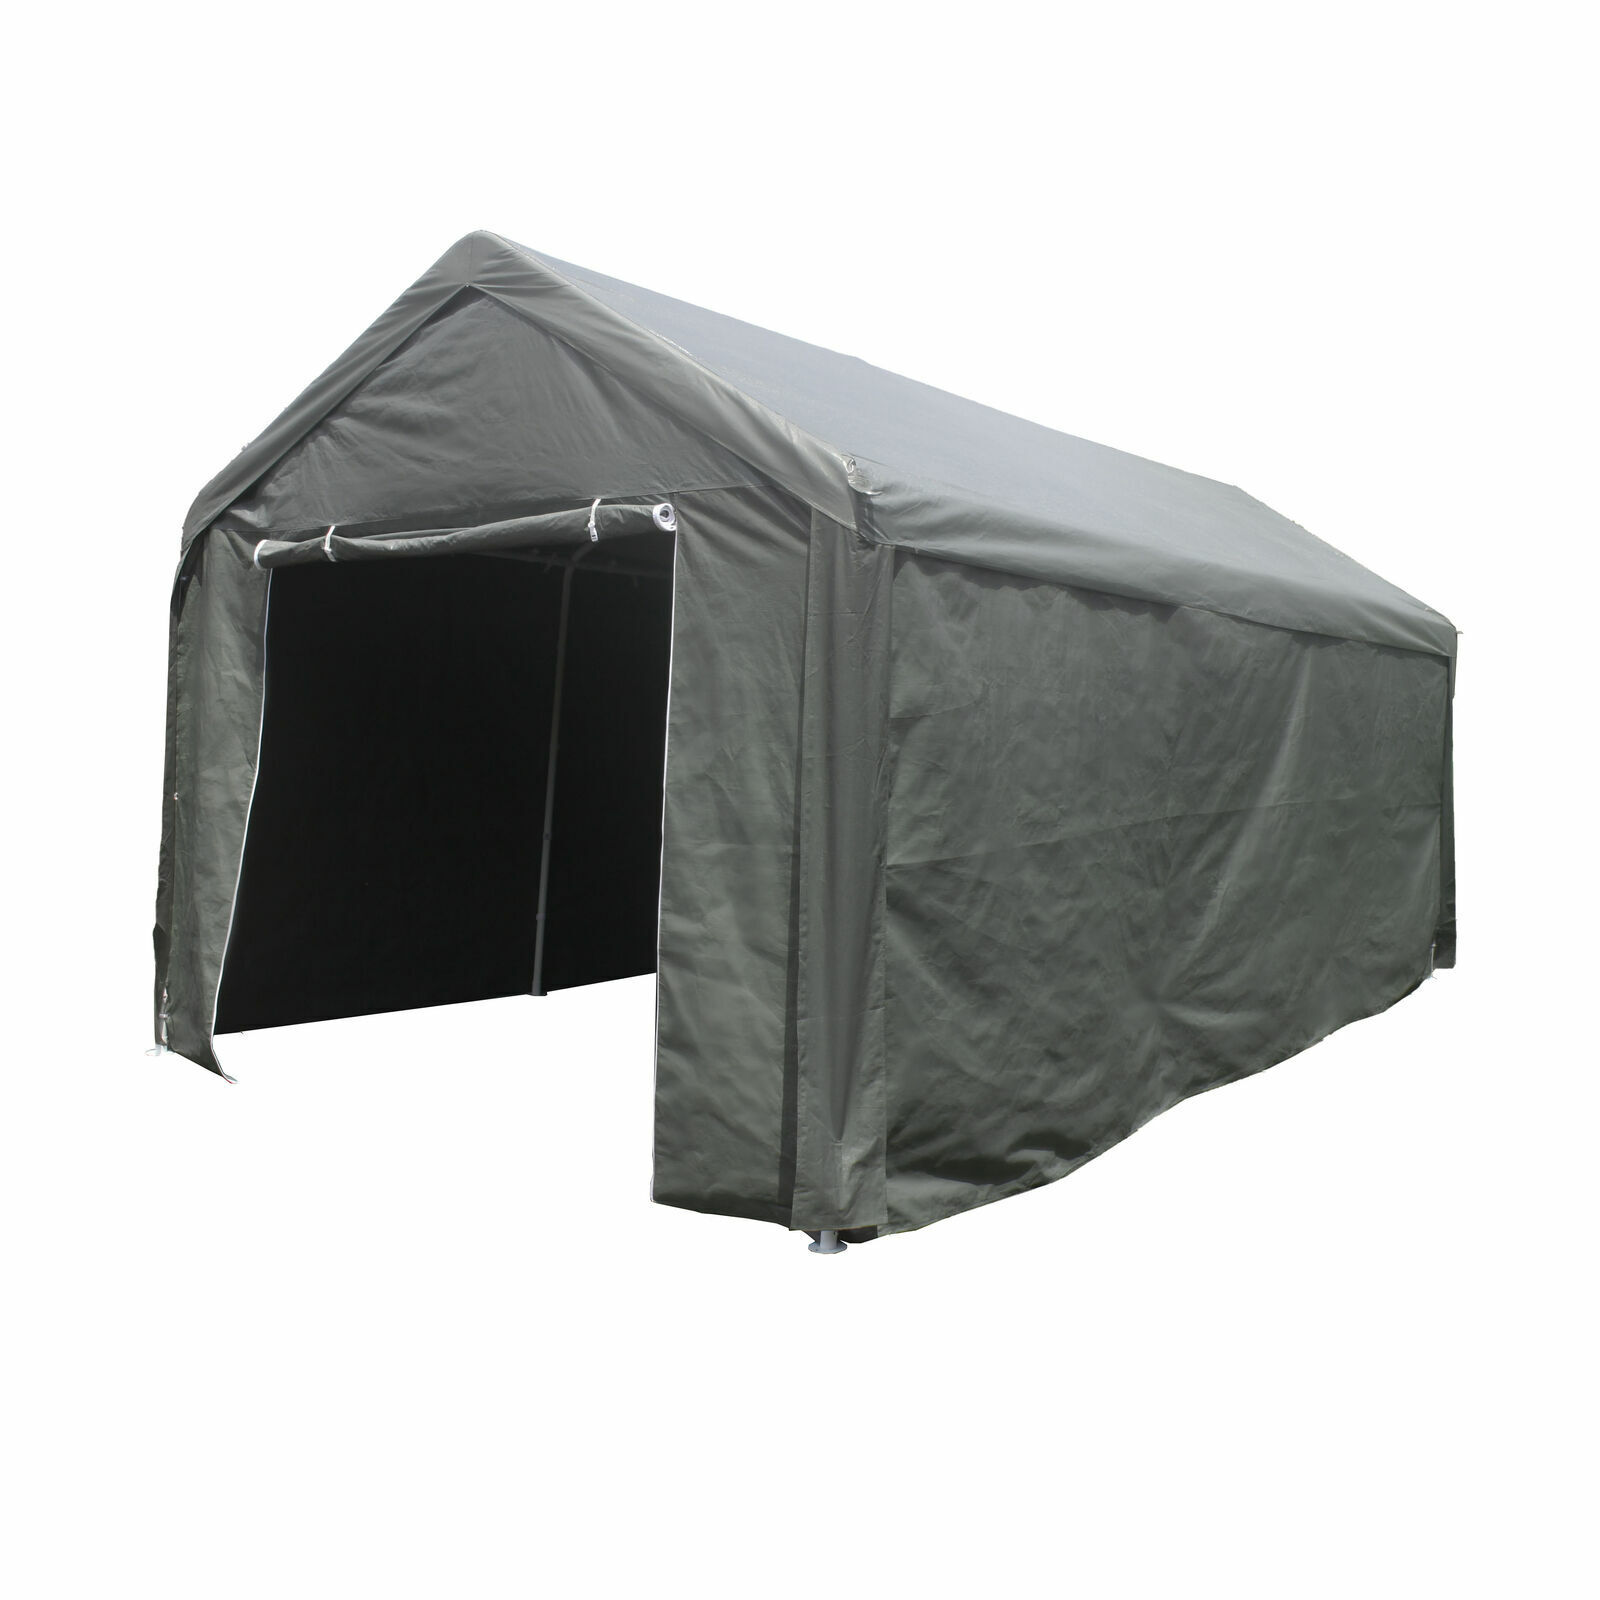 Carport Tent Car Boat 10x20 Feet Canopy Heavy Duty Outdoor U